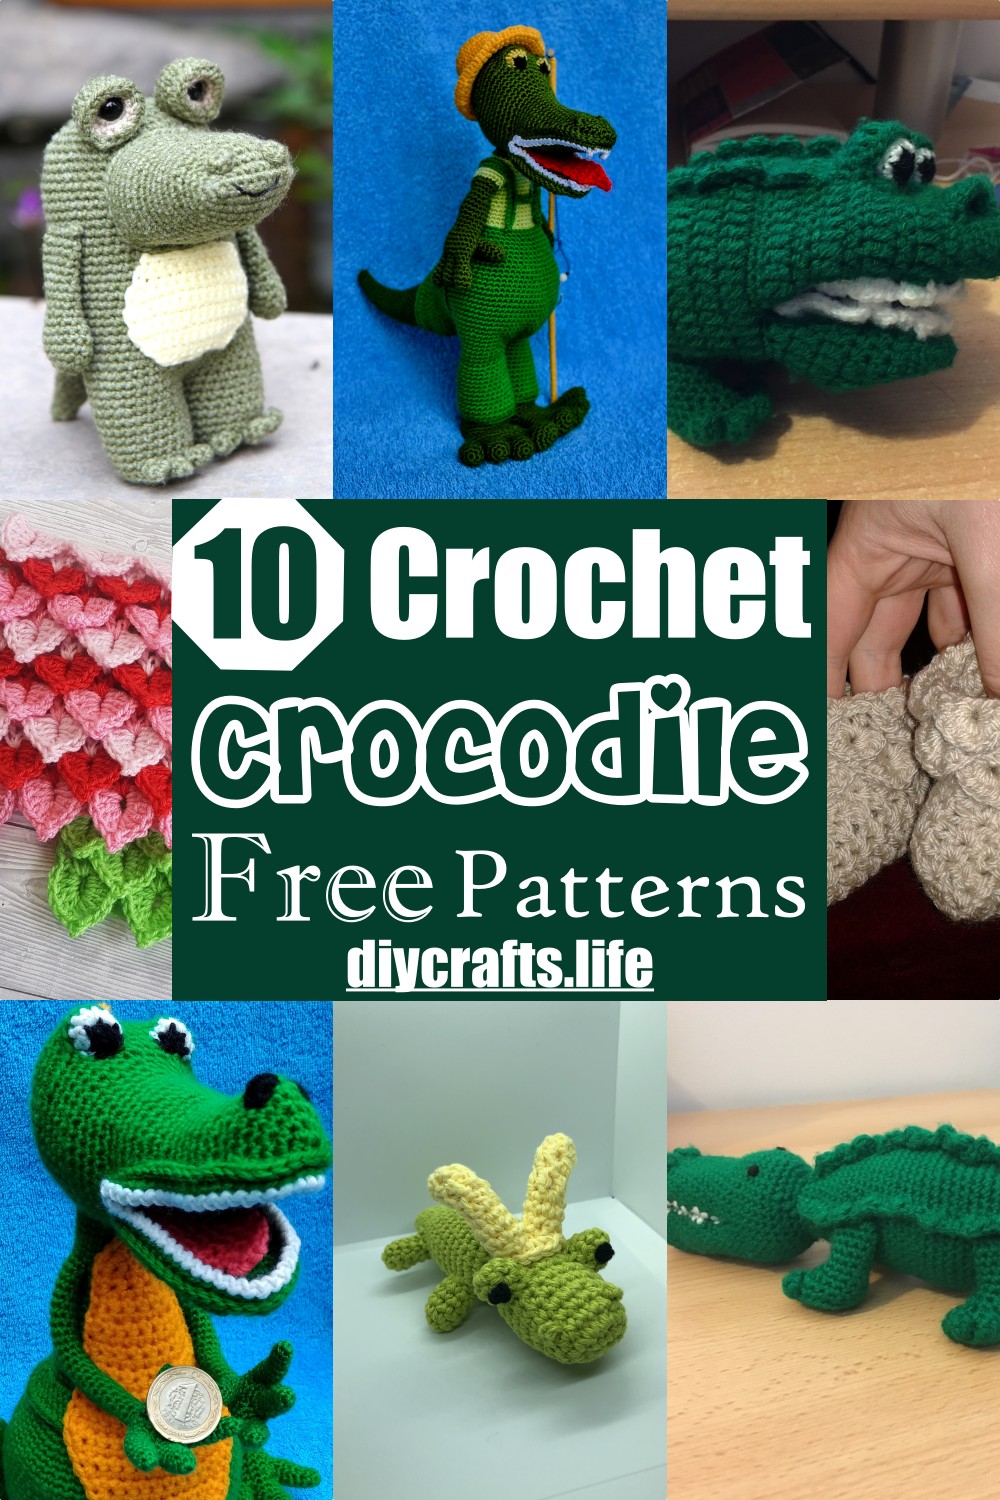 Free Crochet Crocodile Patterns 2